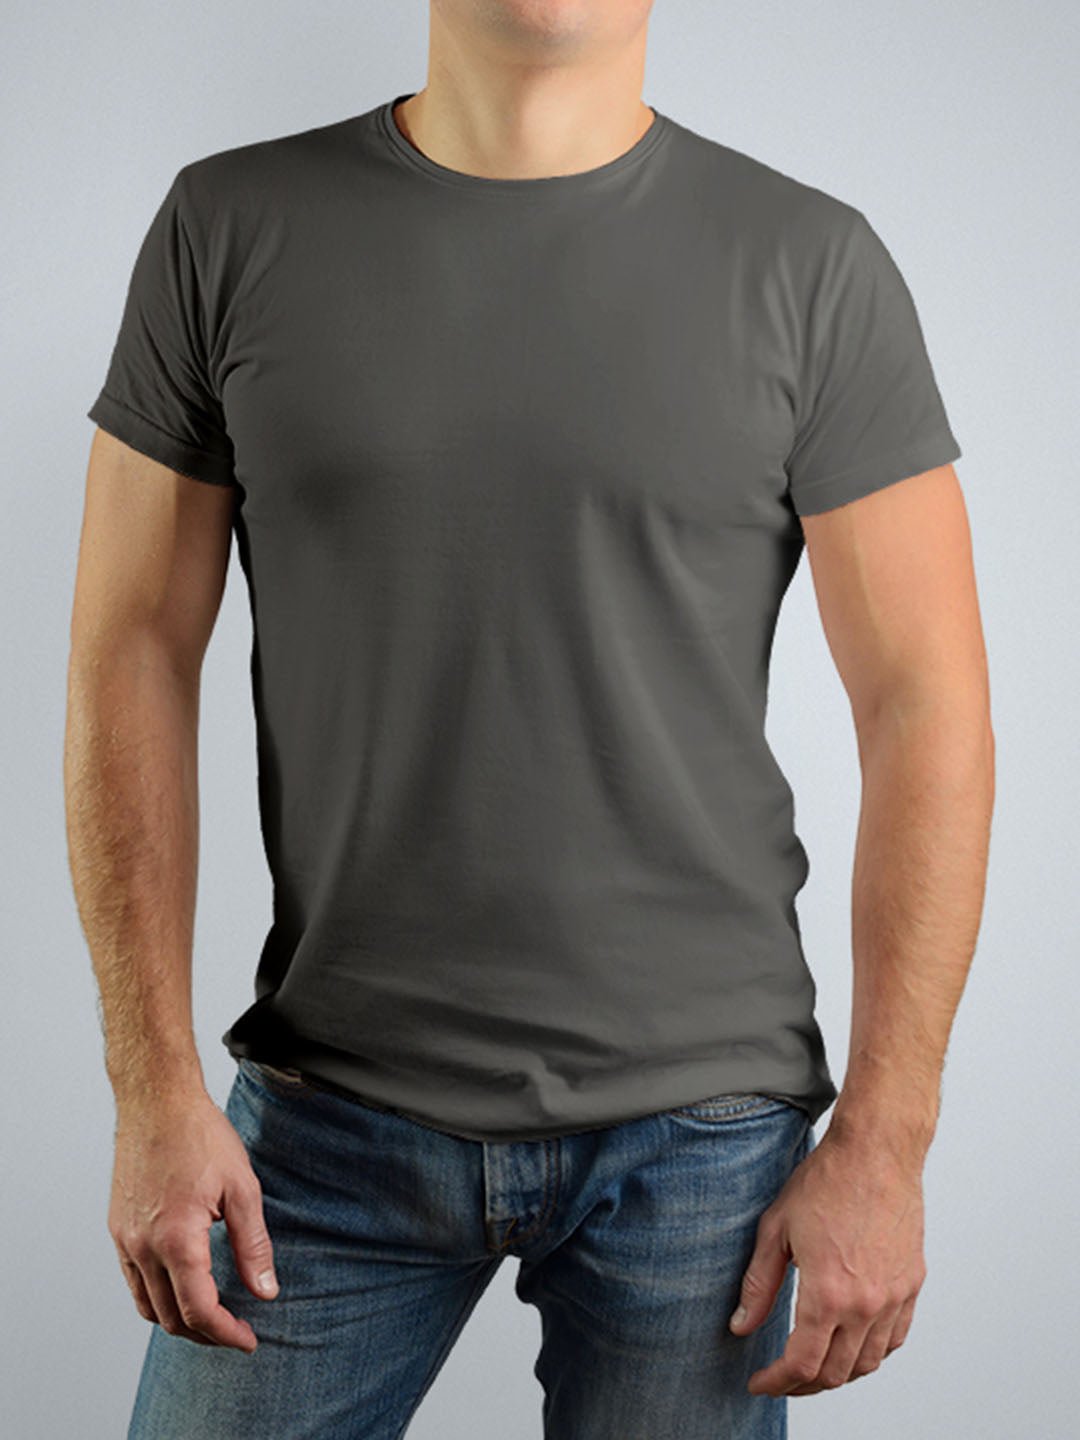 Basics Round Neck Half Sleeve T-shirt - The Minies